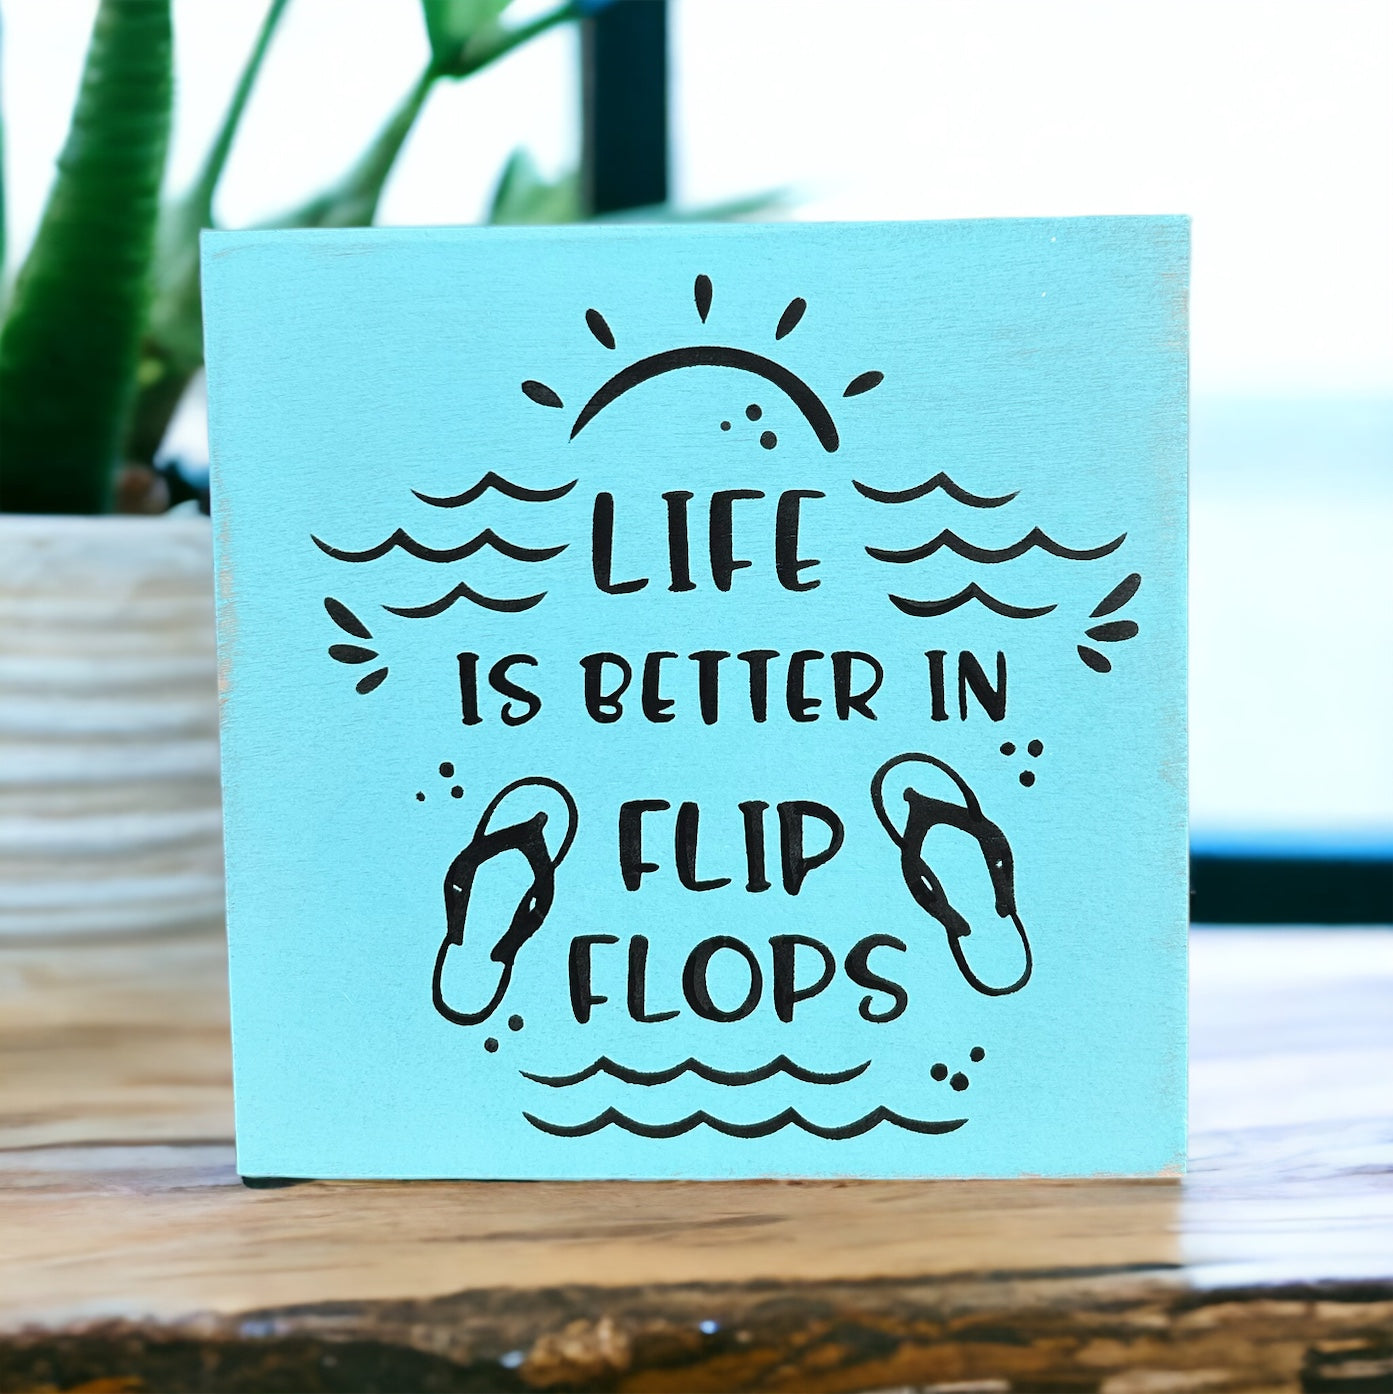 "Life is better in flip flops" wood sign